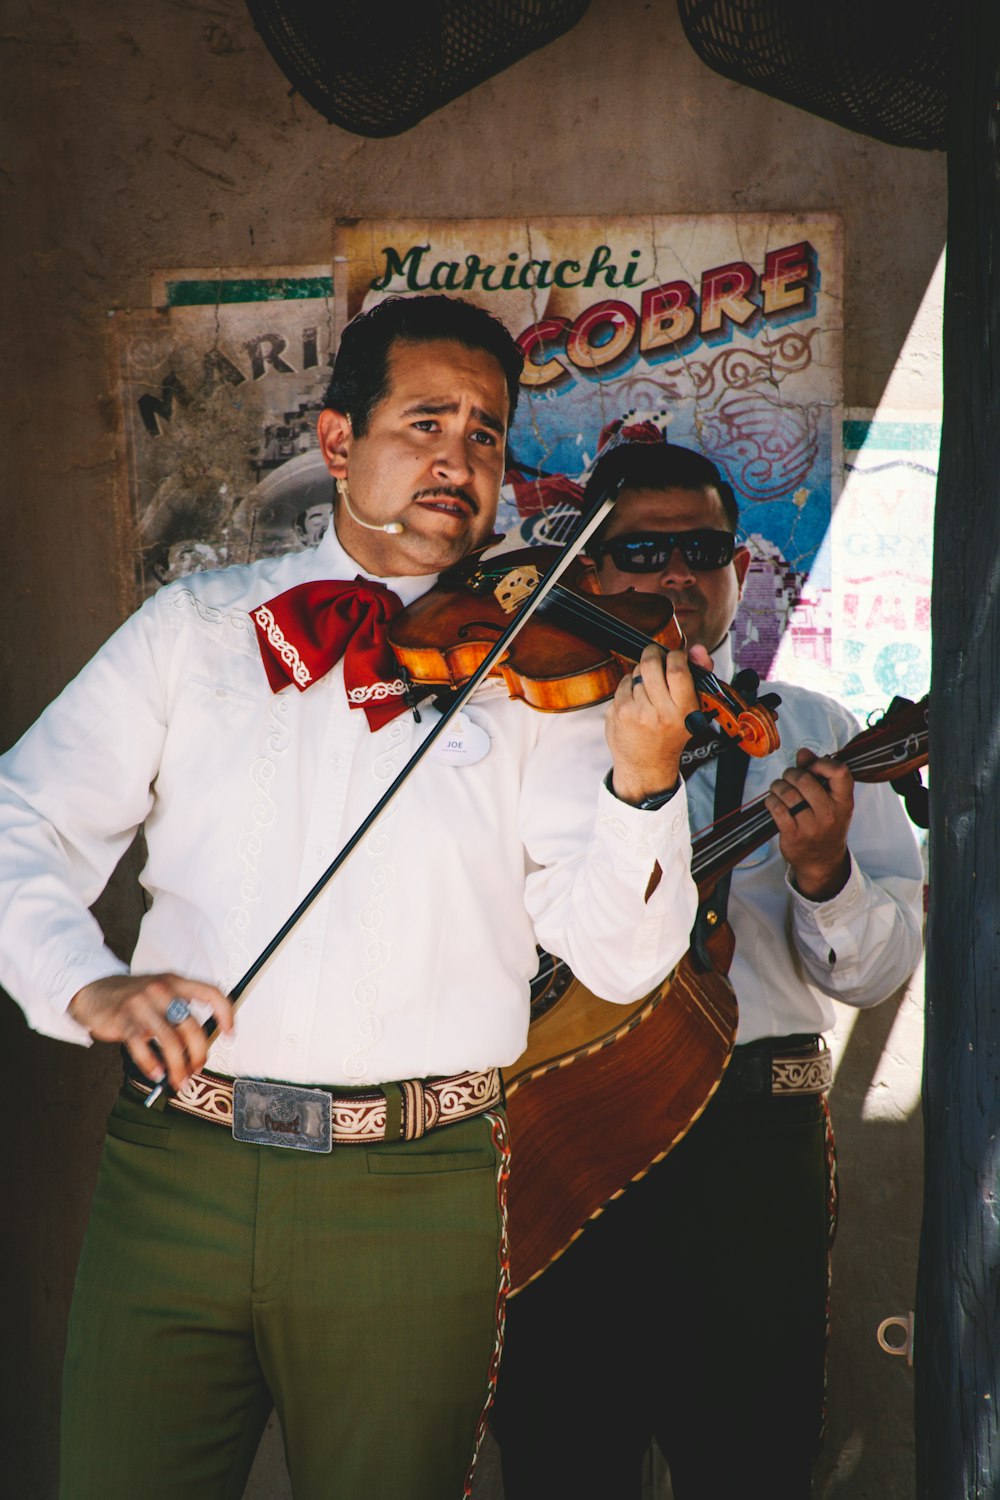 Un hombre tocando un violín con otro hombre parado detrás de él